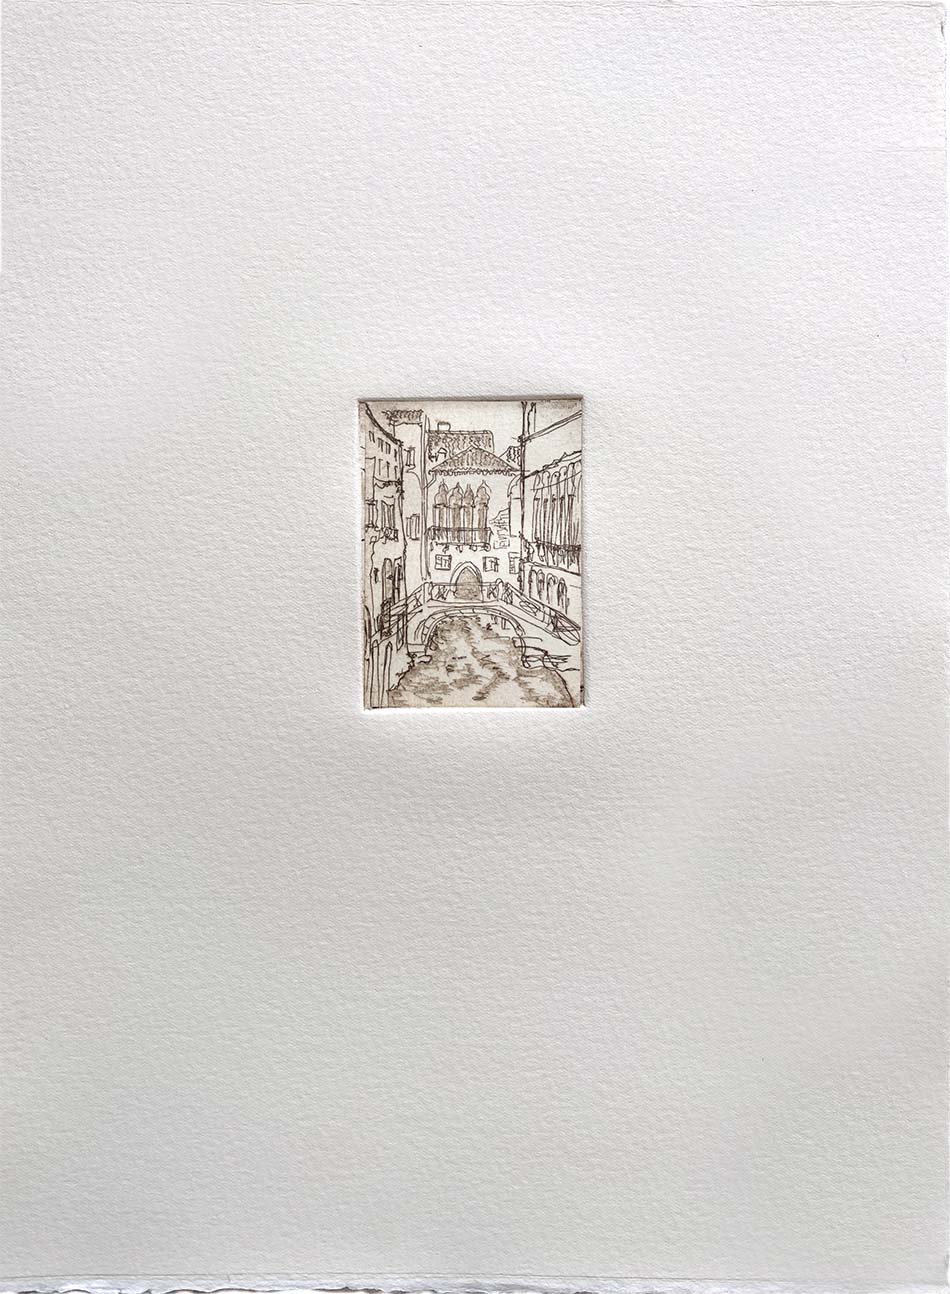 Soula Mantalvanos Piscina S. Moise Venice 2023 etching 7 x 5cm ed of 10 $210 uf $355 f